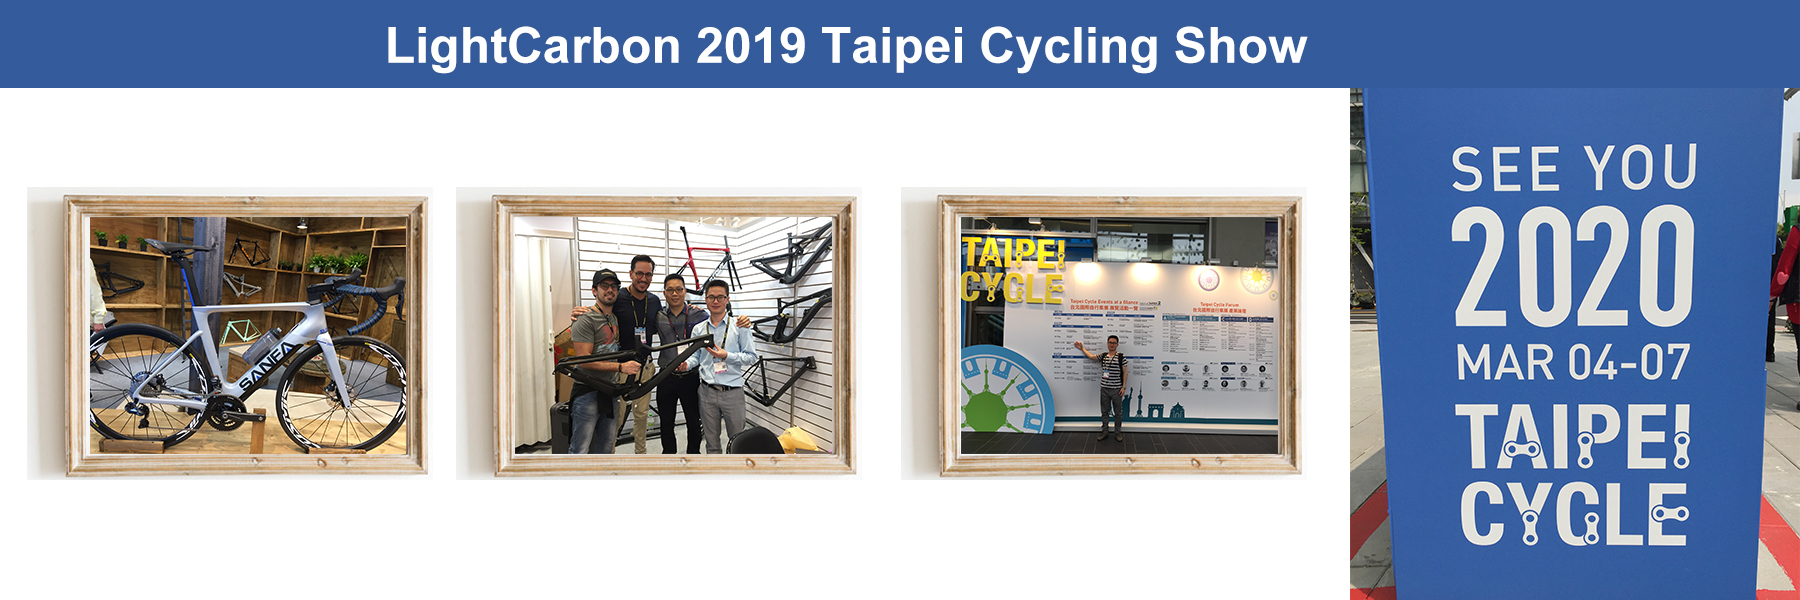 2019 lightcarbon Taipei cycling show